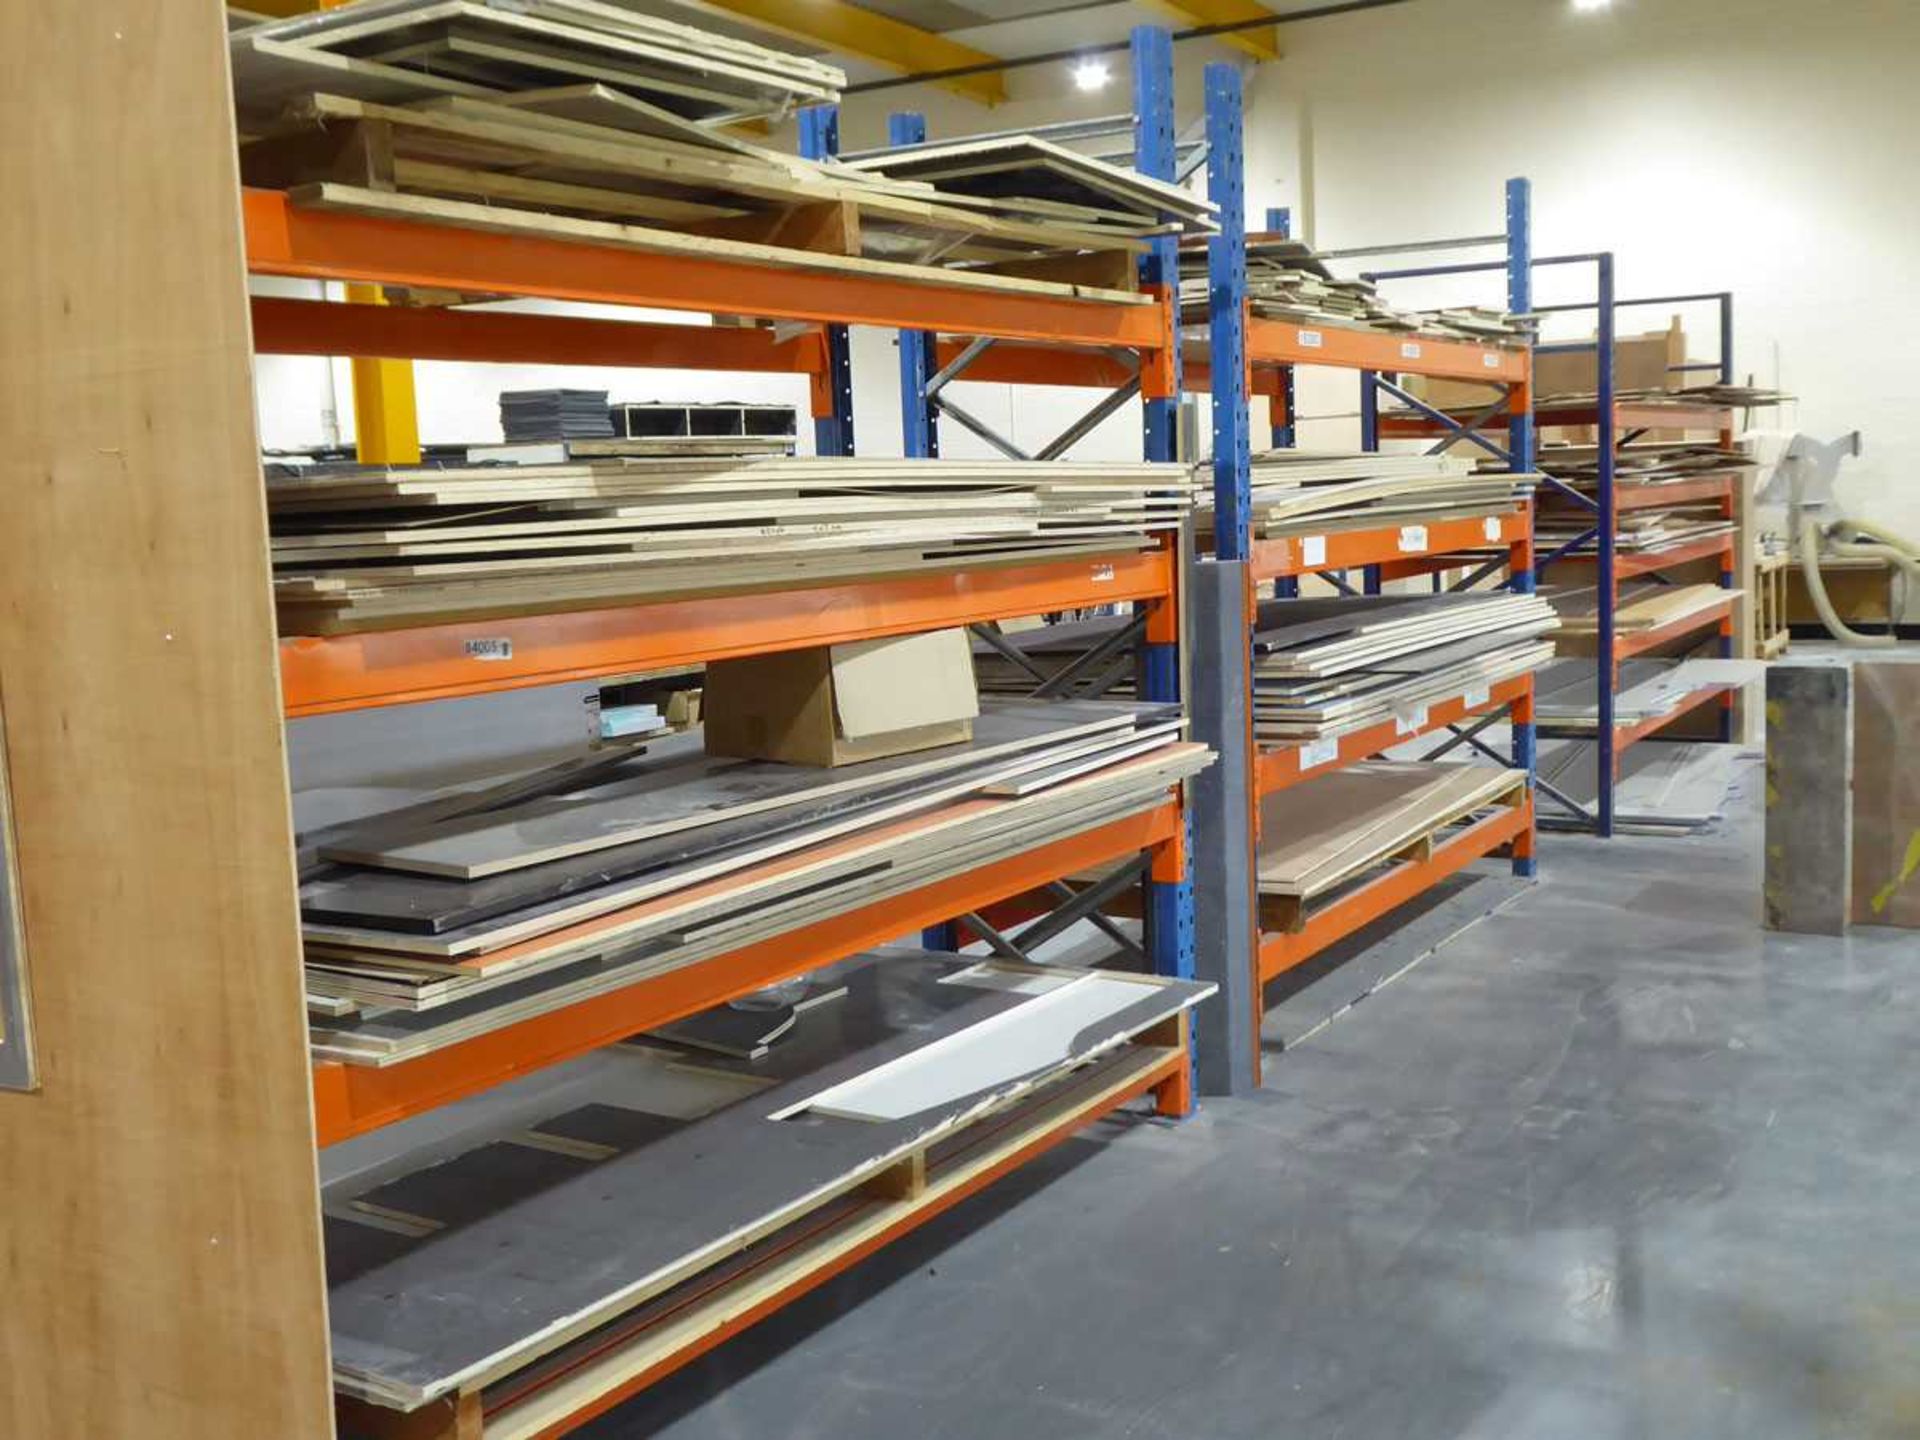 +VAT 4 blue and orange heavy duty pallet racks comprising of 8 uprights and 34 orange beams. Each